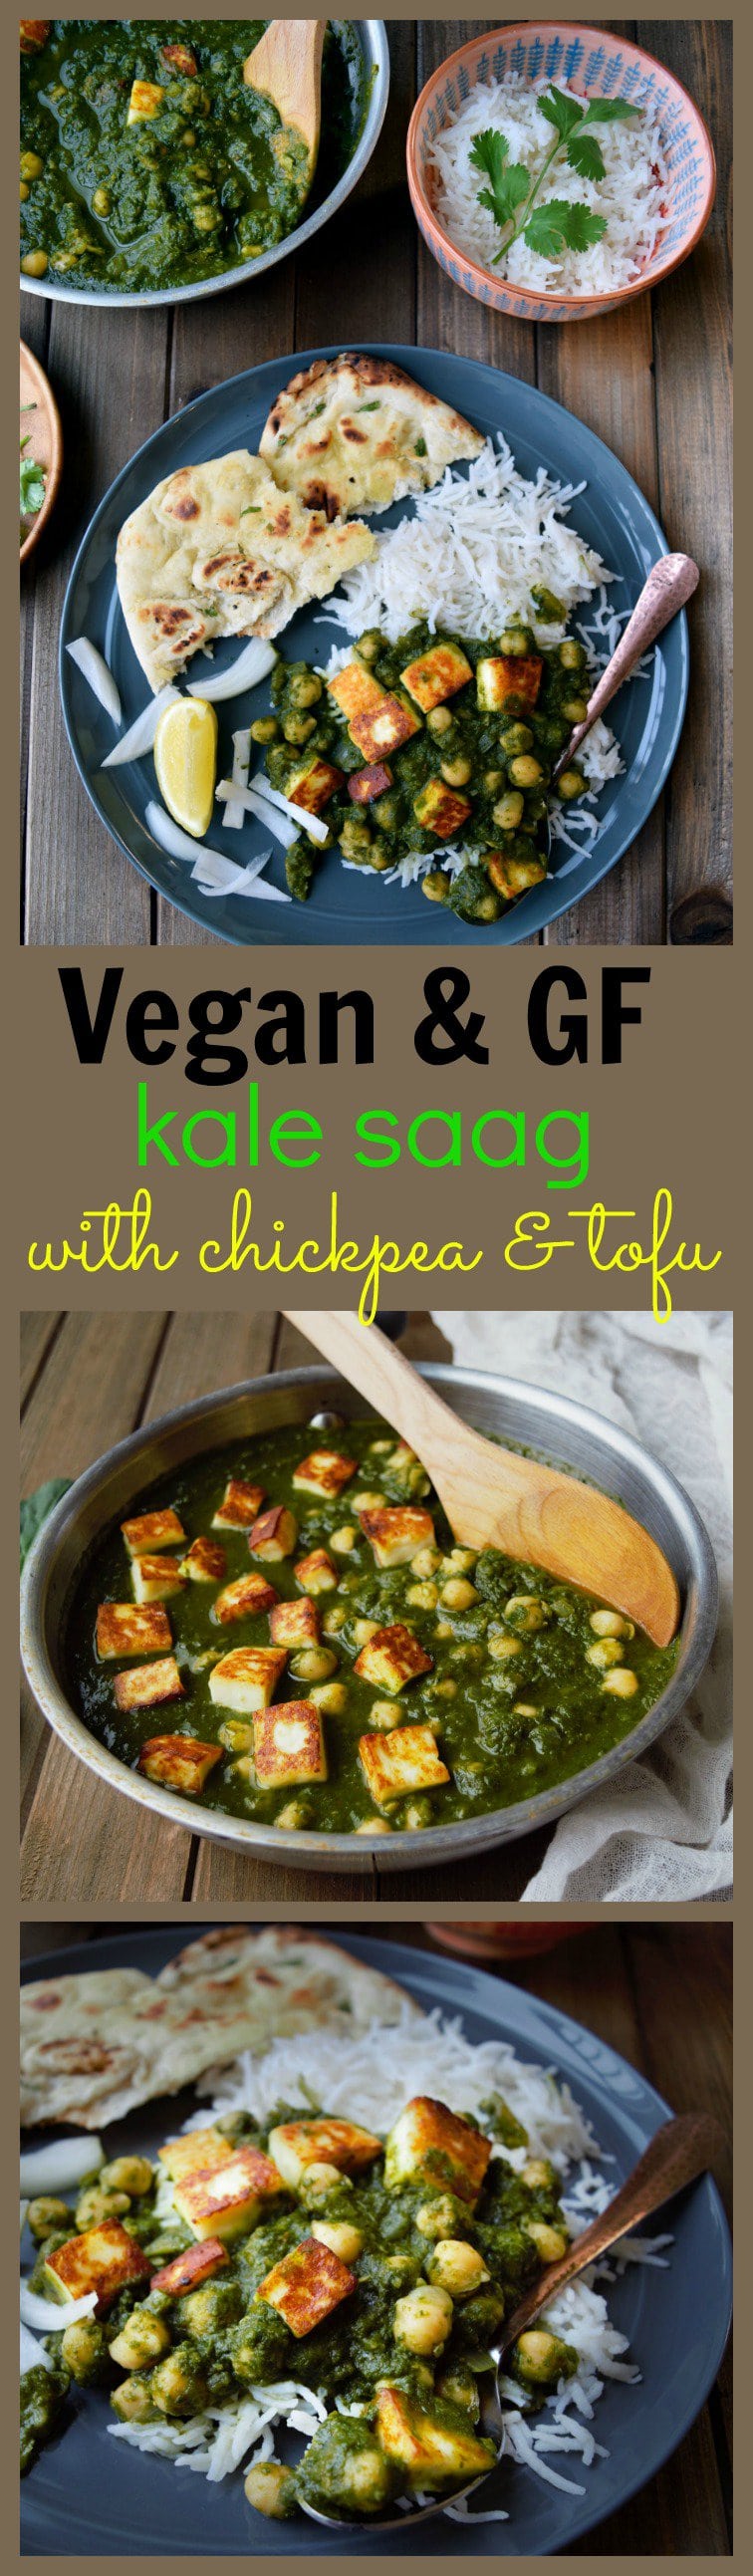 kale saag with chickpea & tofu vegan gluten free